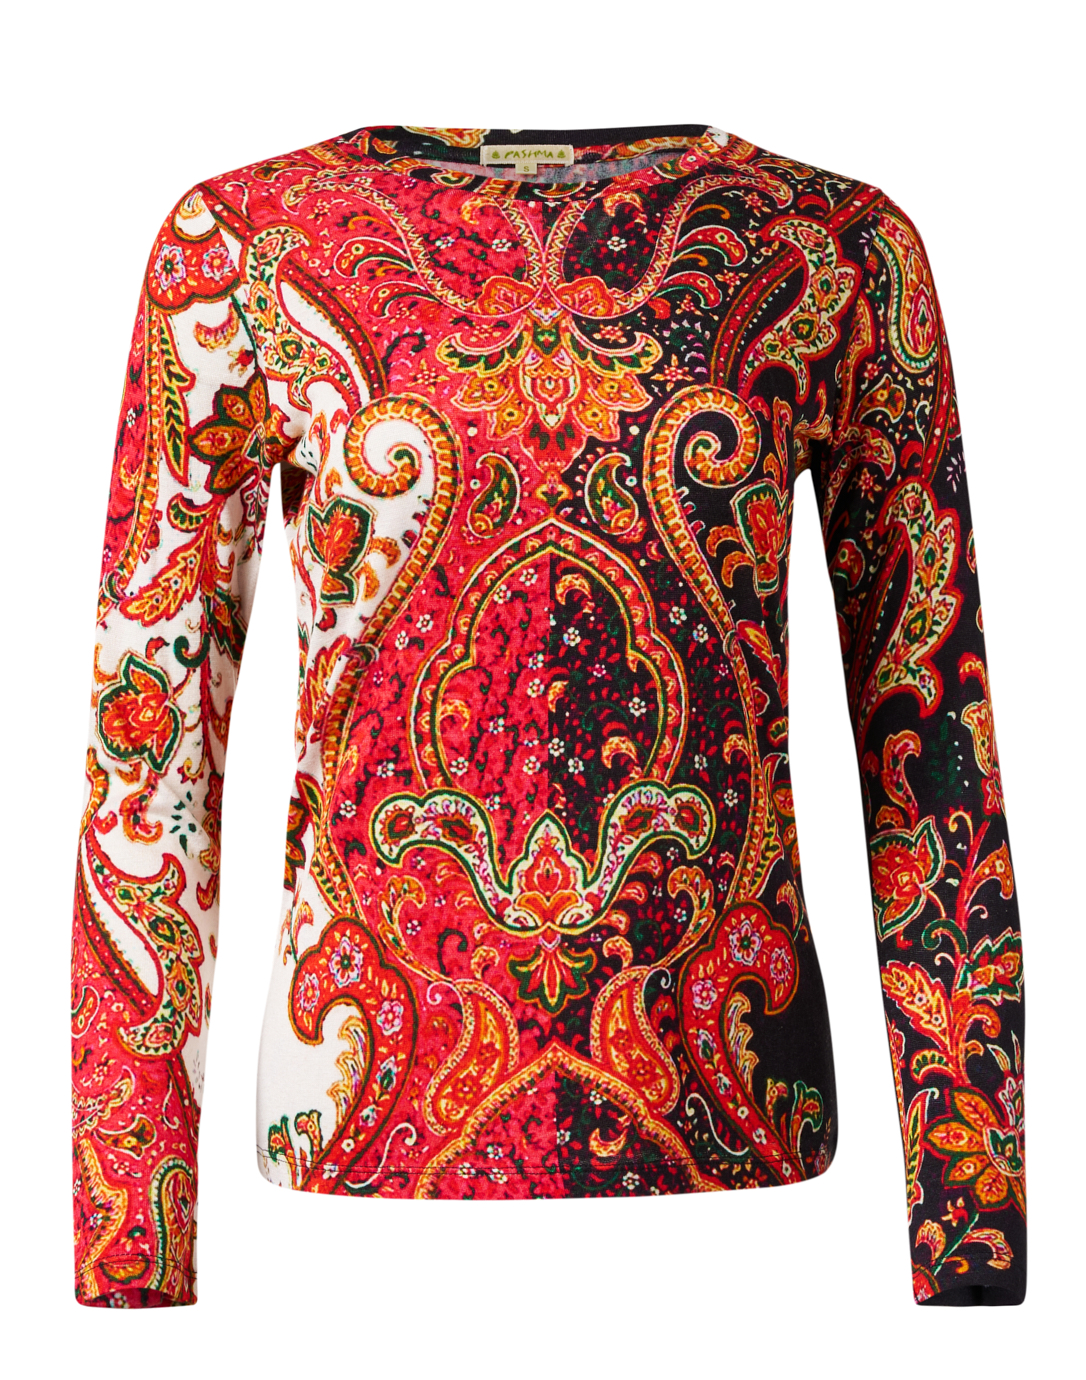 Red Black and White Print Cashmere Silk Sweater | Pashma